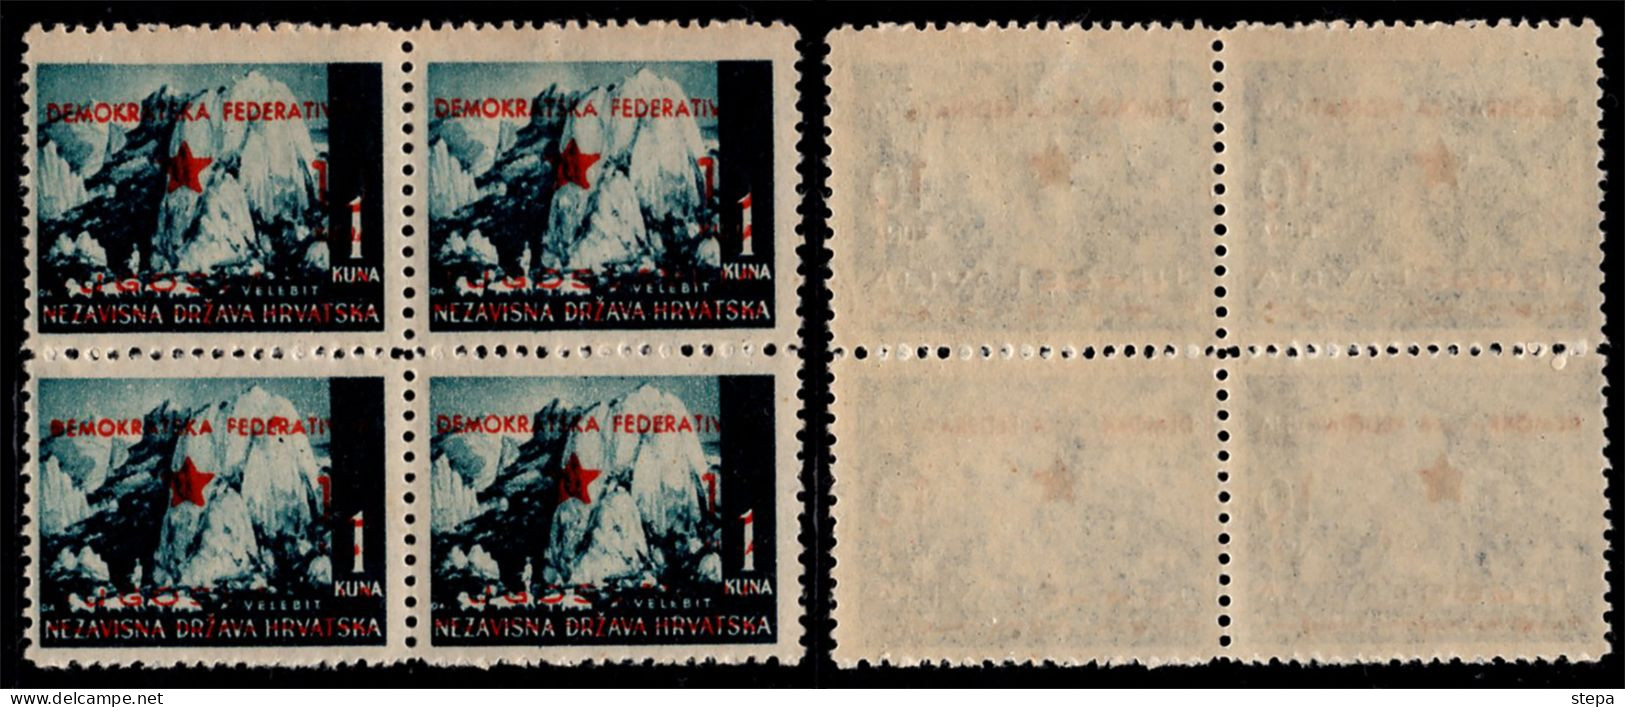 YUGOSLAVIA-CROATIA, PROVISIONAL ISSUE FOR SPLIT, 10/1 KUNA "LANDSCAPES" POROUS PAPER BLOCK OF FOUR, MNH 1945 RARE!!!! - Croatia